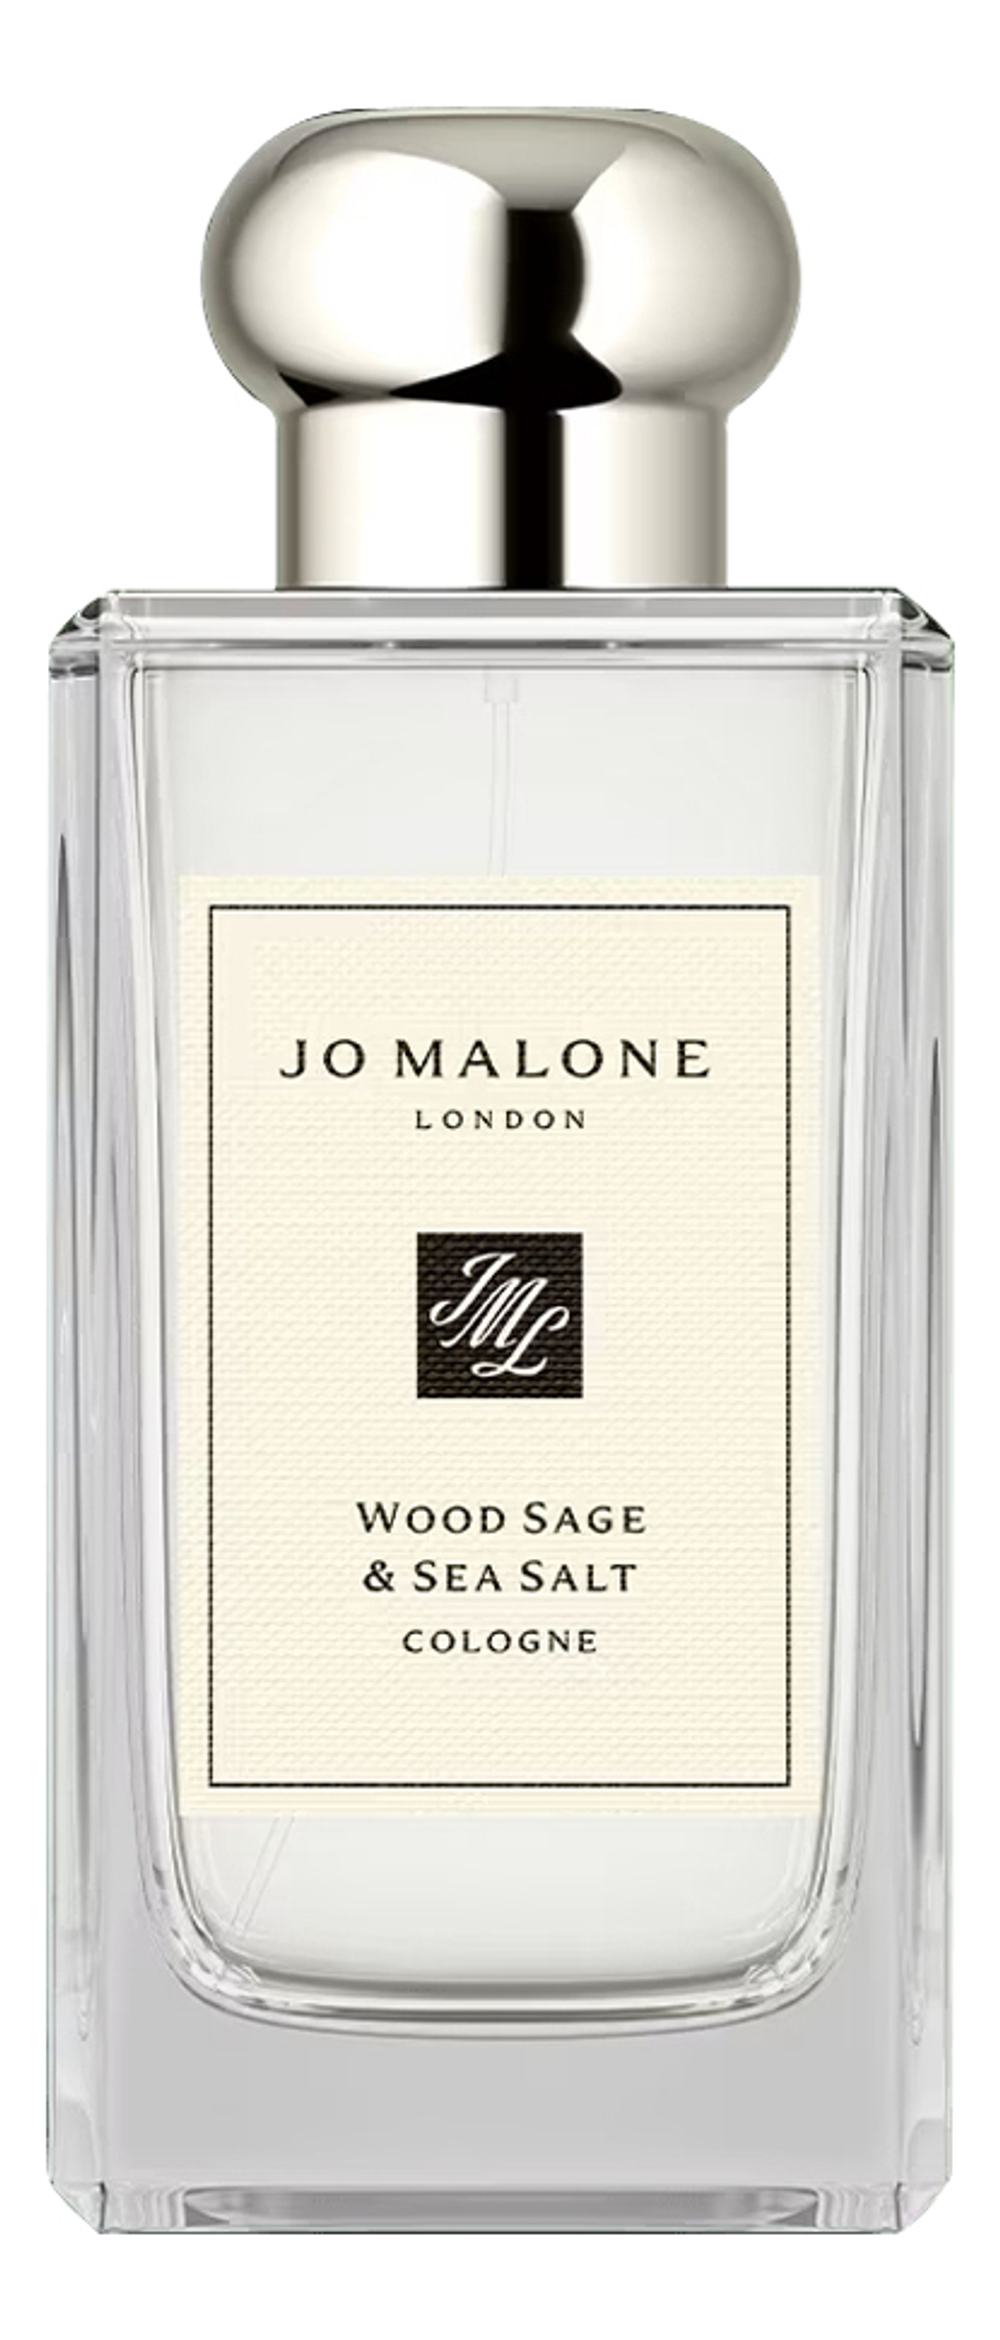 Jo Malone Wood Sage & Sea Salt new